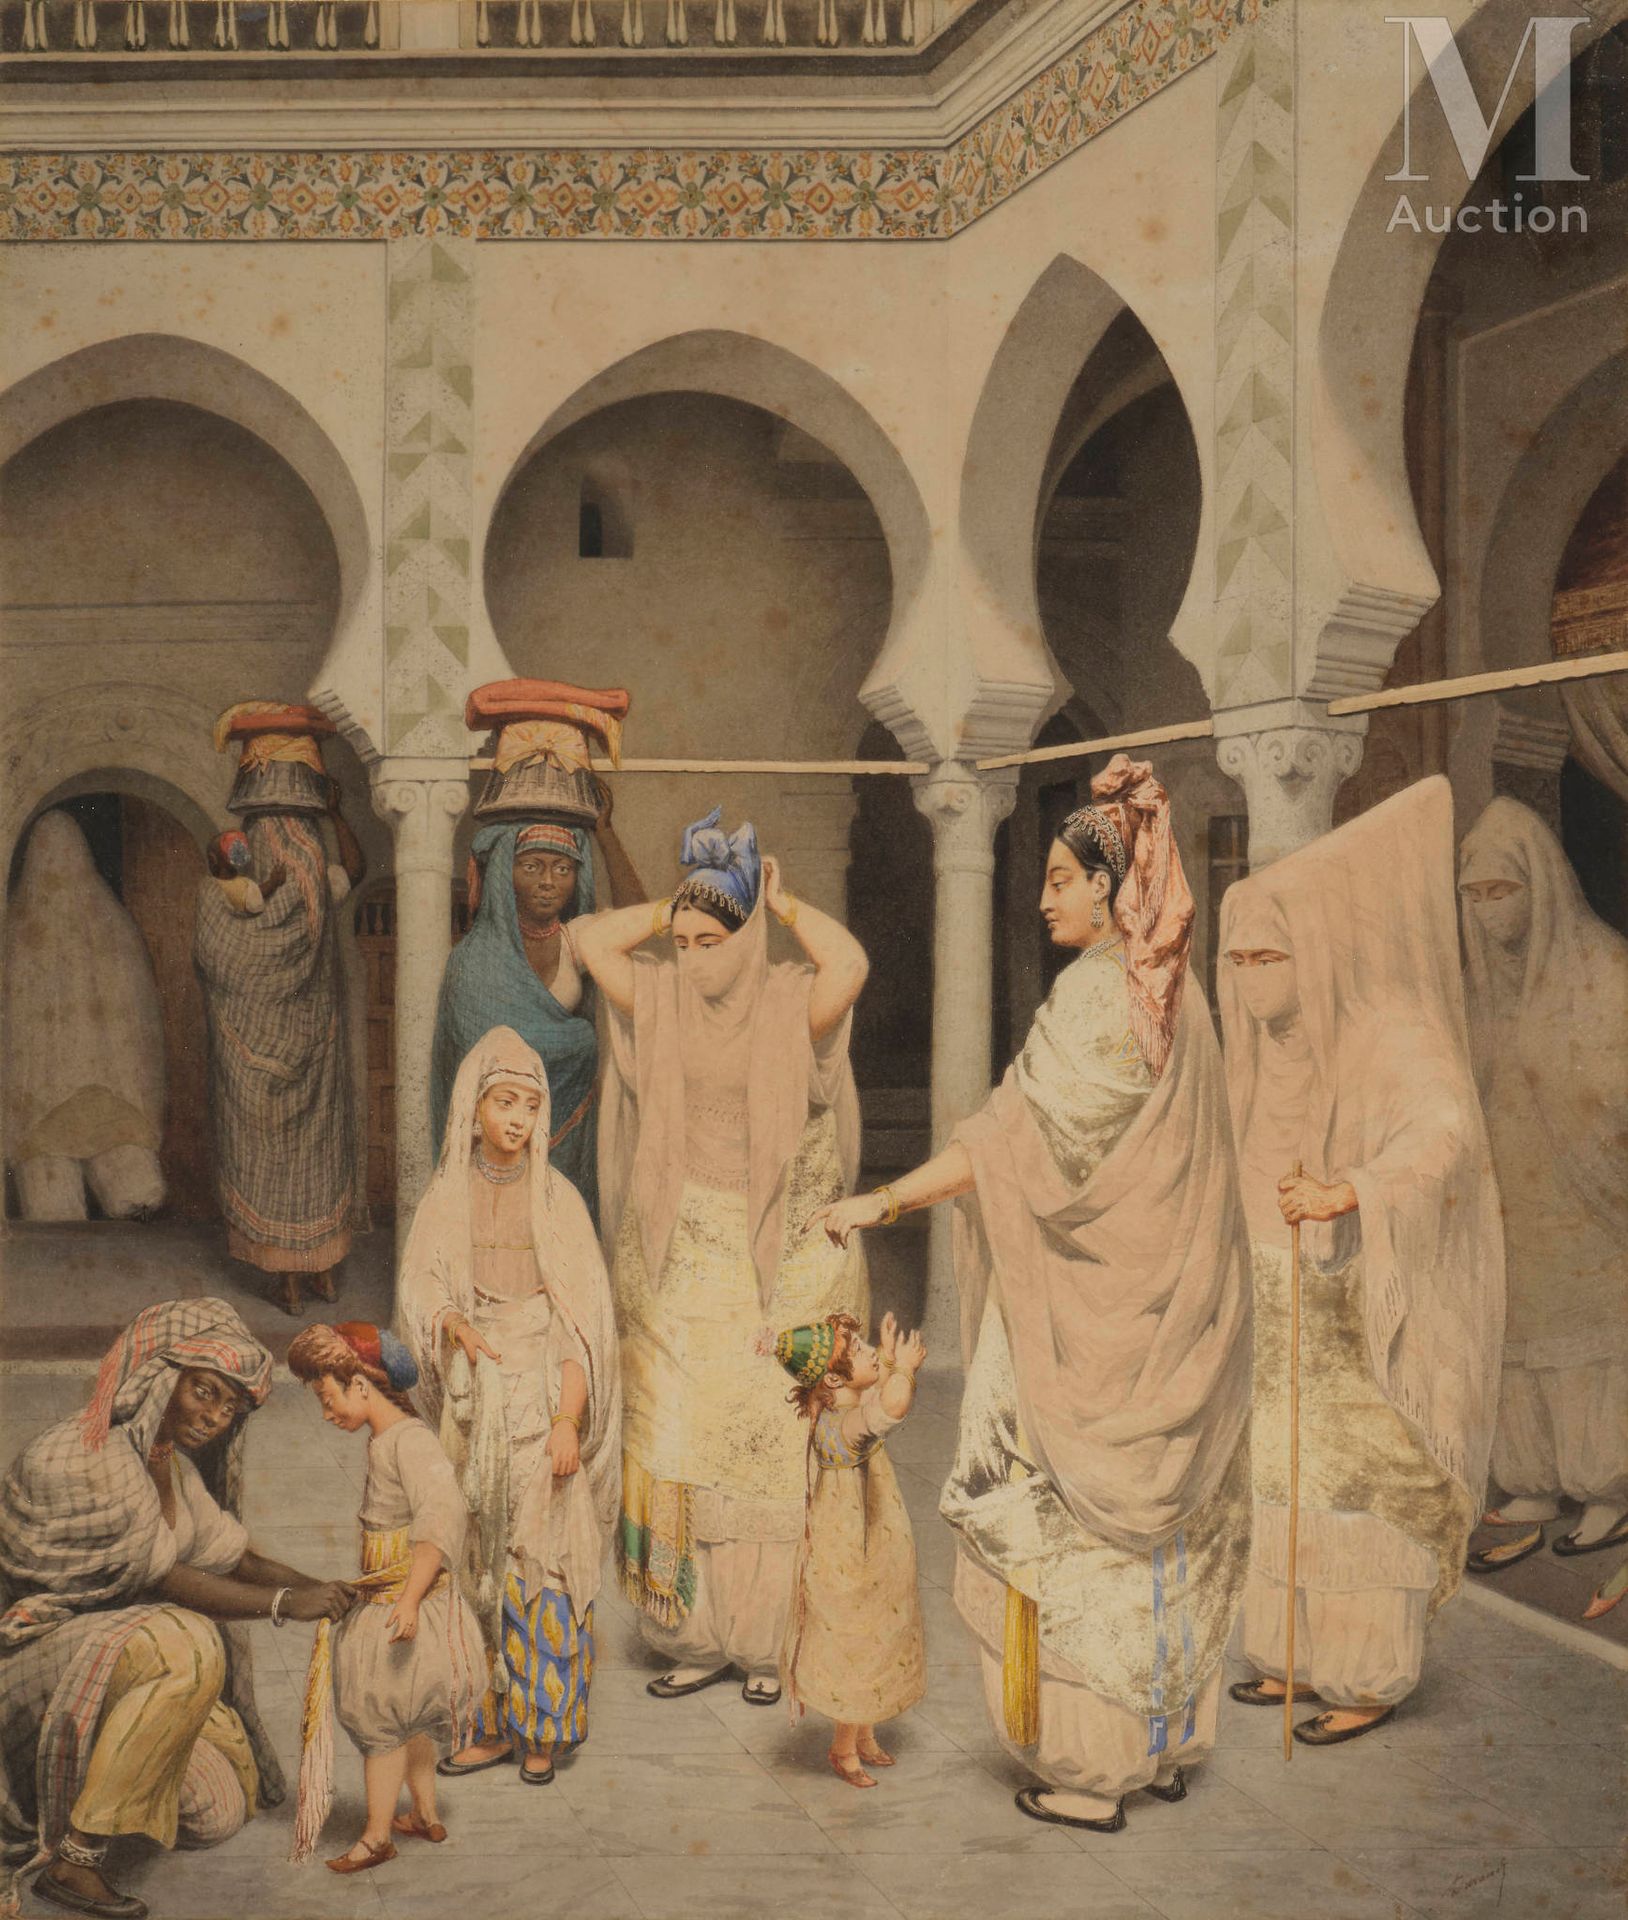 DURAND (Actif au XIX ème siècle) 内陆地区的阿尔及利亚妇女和幼童

水彩画

50 x 42 cm 正在观看

右下角署名：Du&hellip;